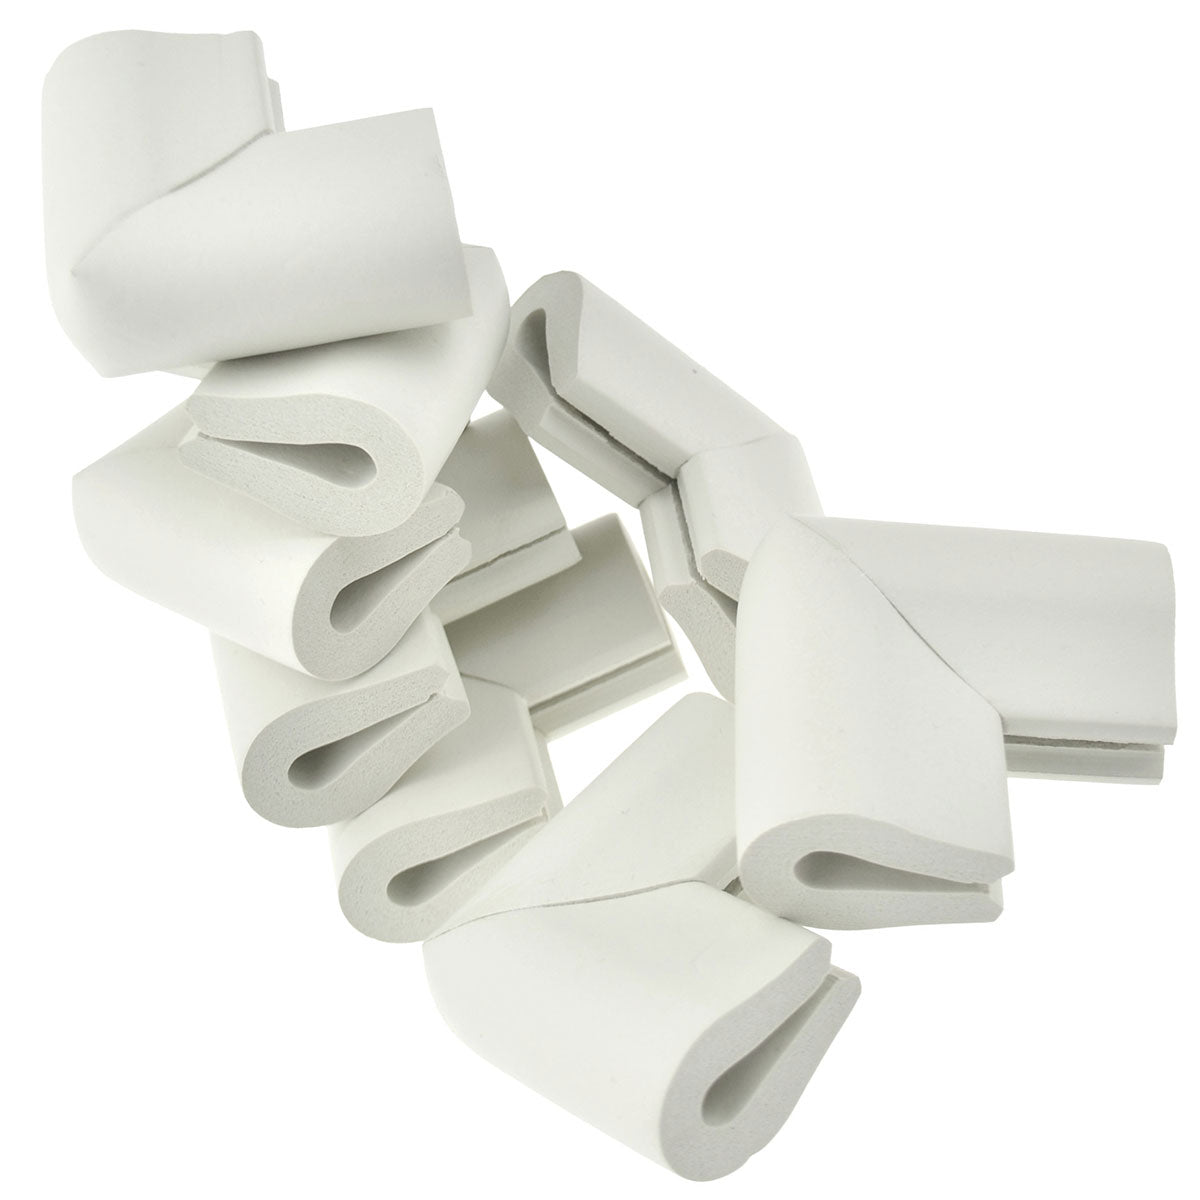 12 Pieces Cream White U-Shaped Foam Corner Protectors